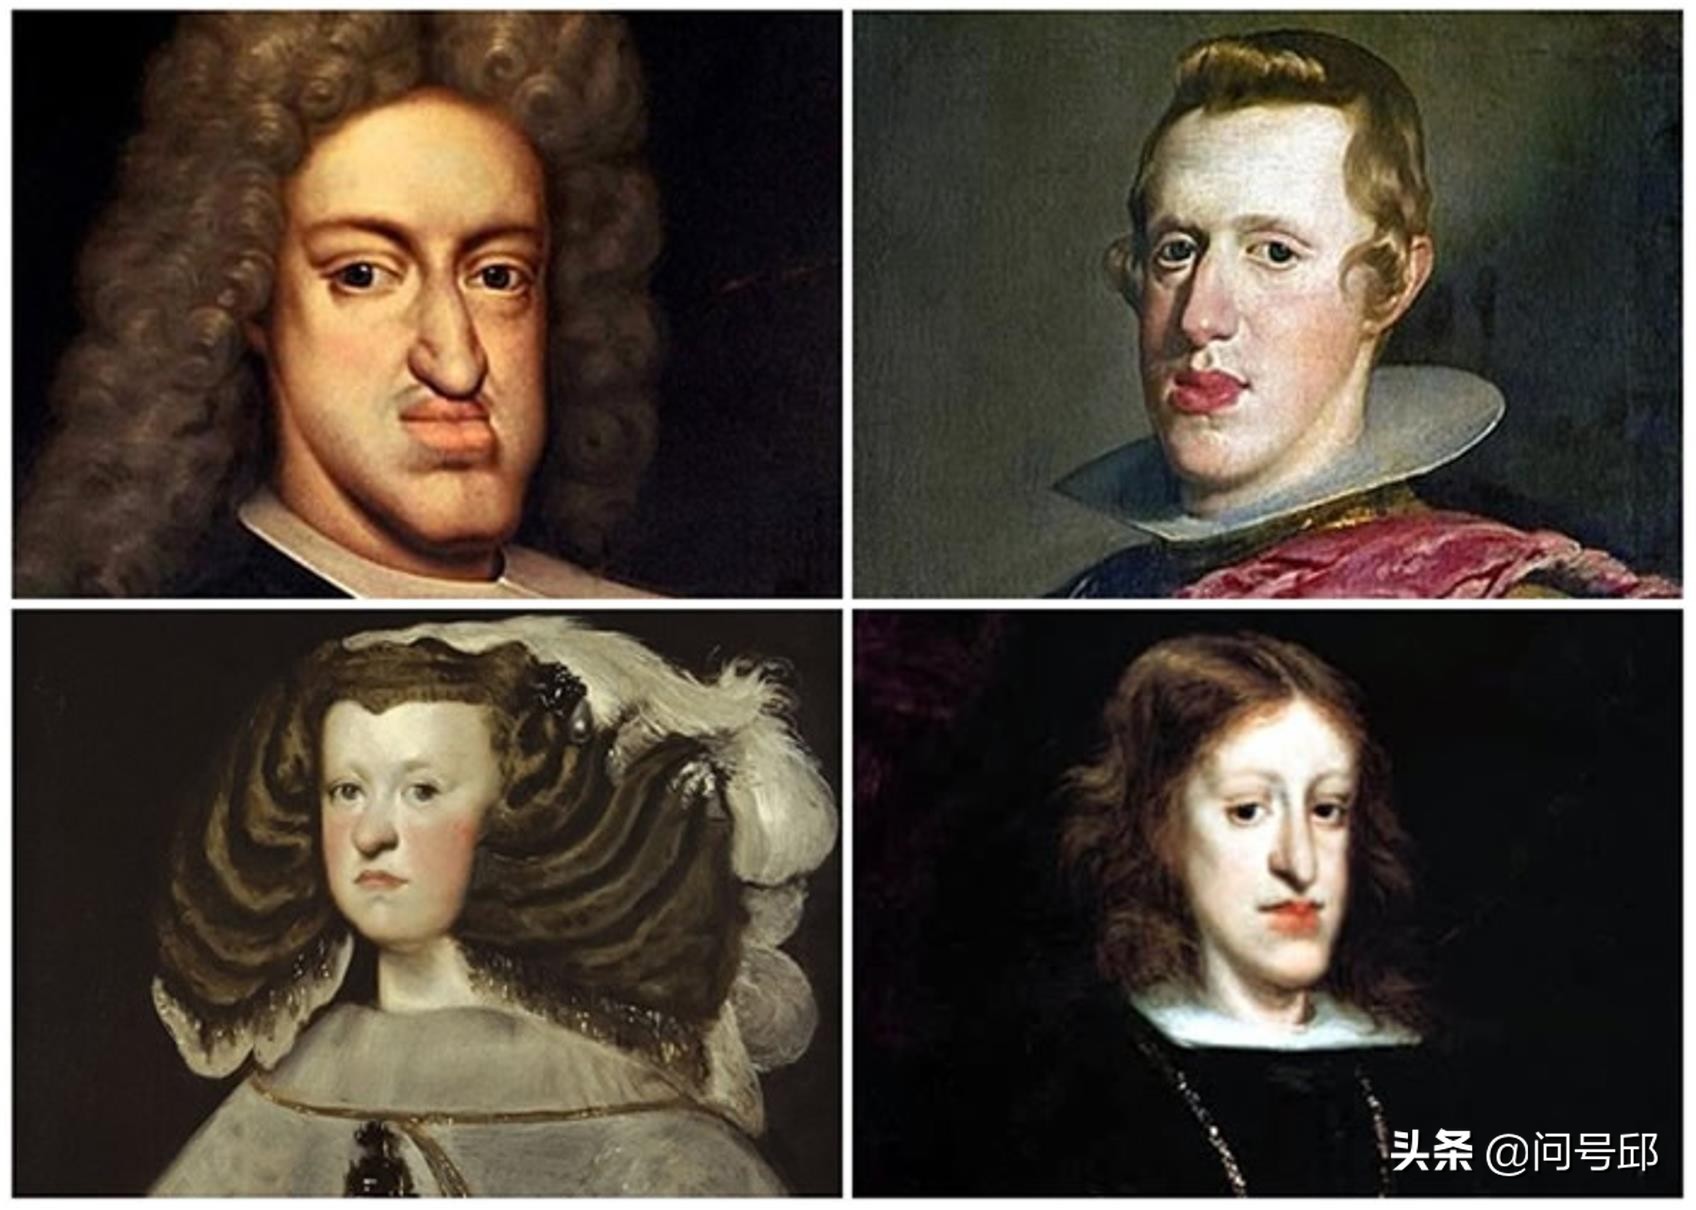 Centuries of inbreeding among European royals responsible for